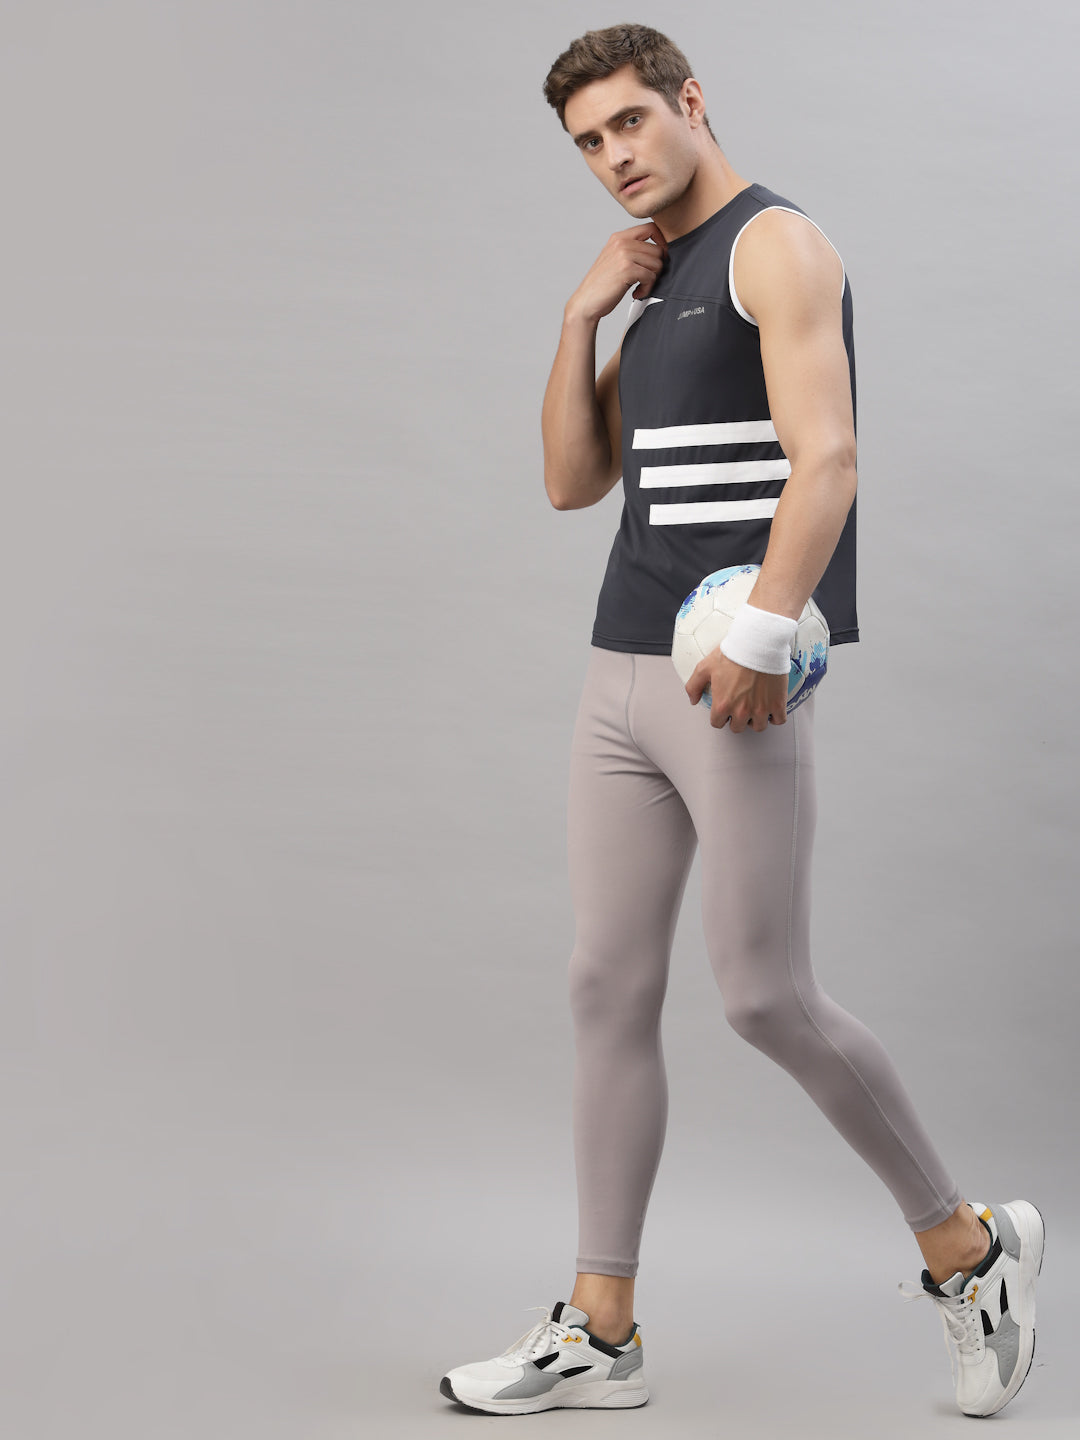 COD ae61segaw 【Ready Stock】Men's Fitness Sports Tights